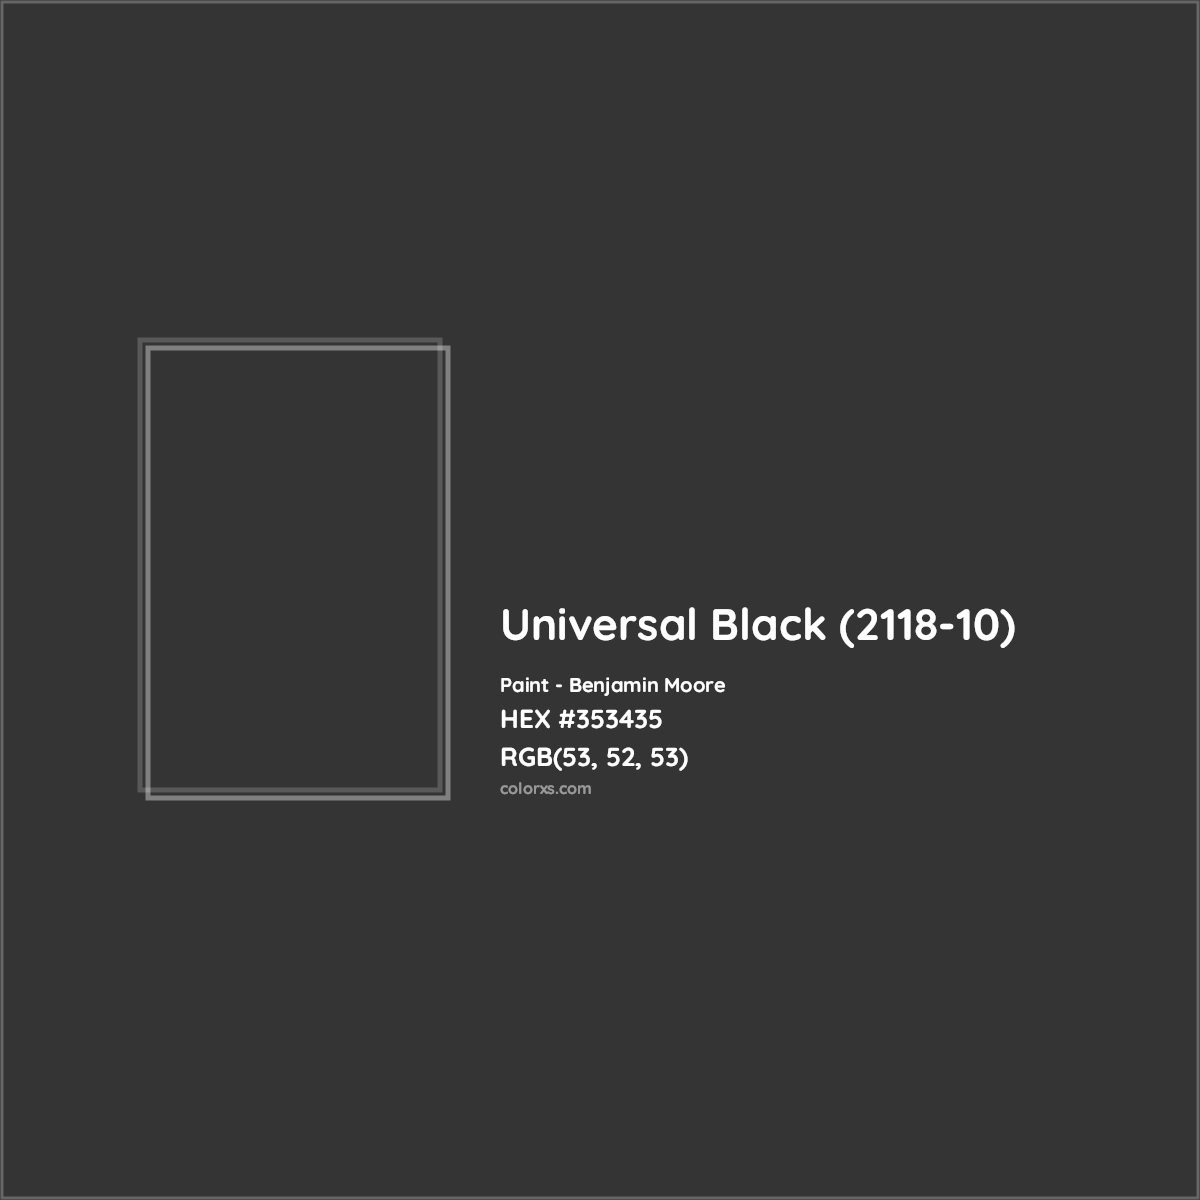 HEX #353435 Universal Black (2118-10) Paint Benjamin Moore - Color Code